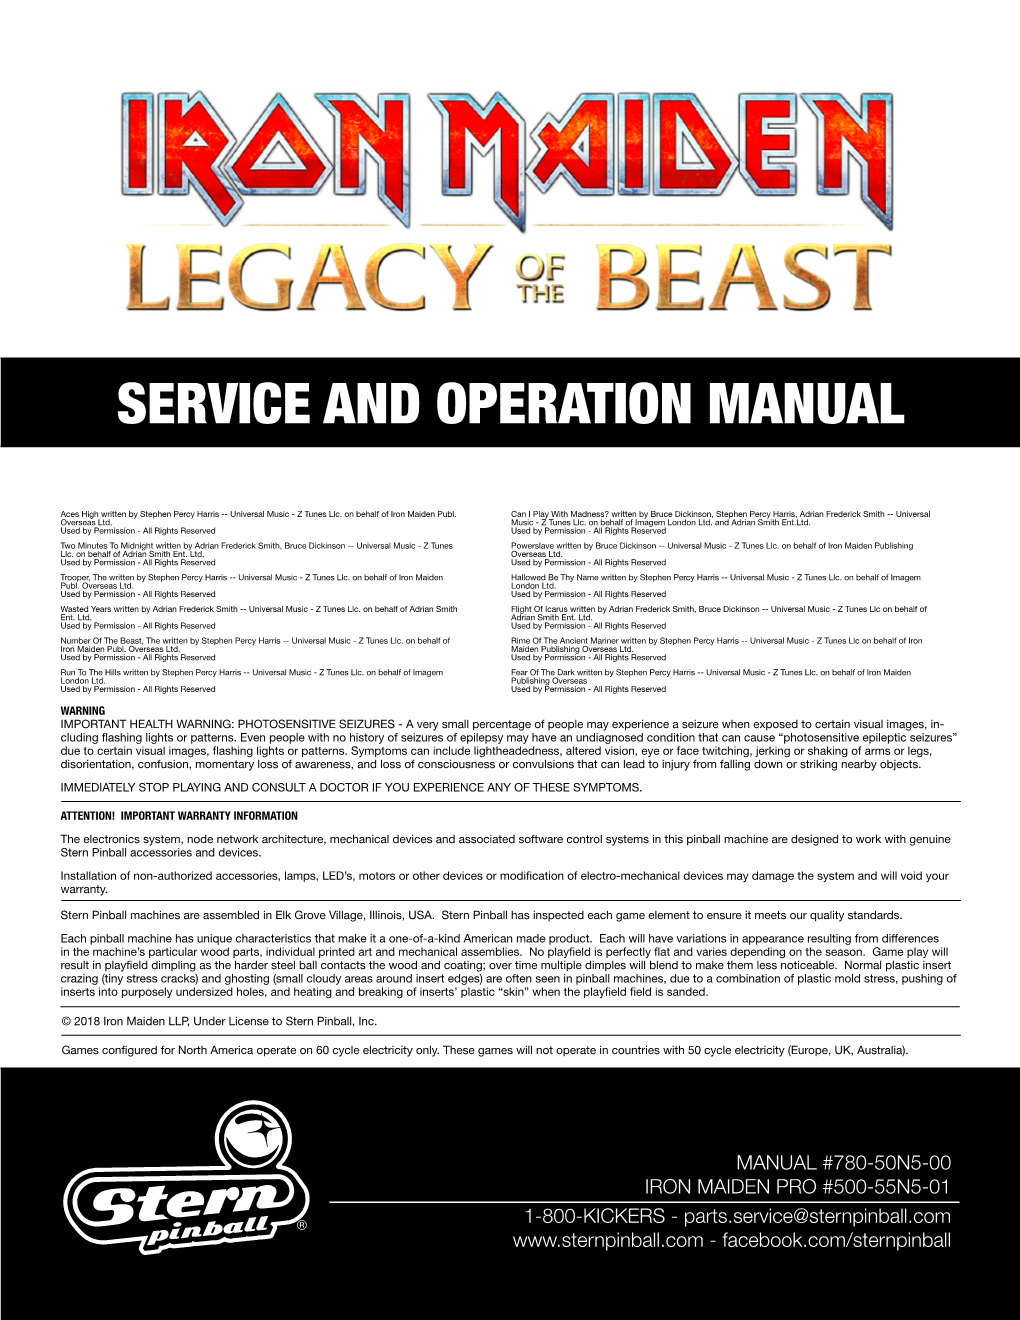 IRON MAIDEN PRO MANUAL 500-55N5-01 © 2018 Iron Maiden LLP, Under License to Stern Pinball, Inc